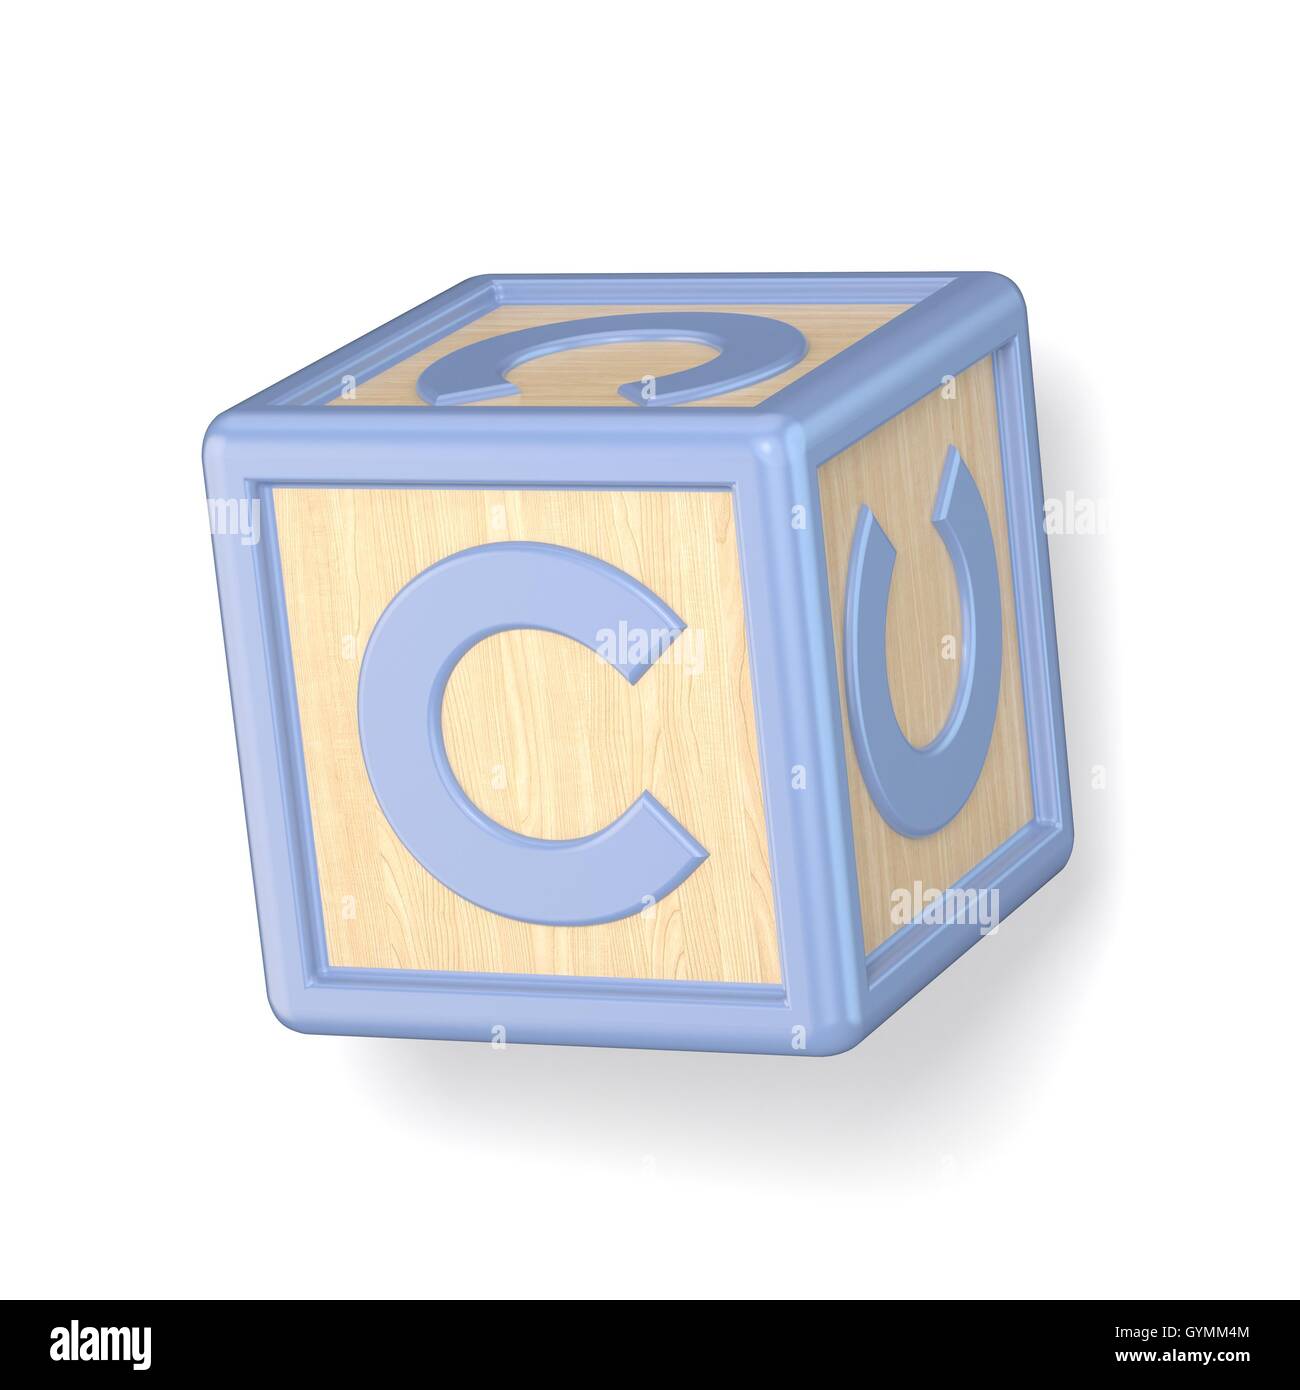 Letter C wooden alphabet blocks font rotated. 3D render illustration isolated on white background Stock Photo